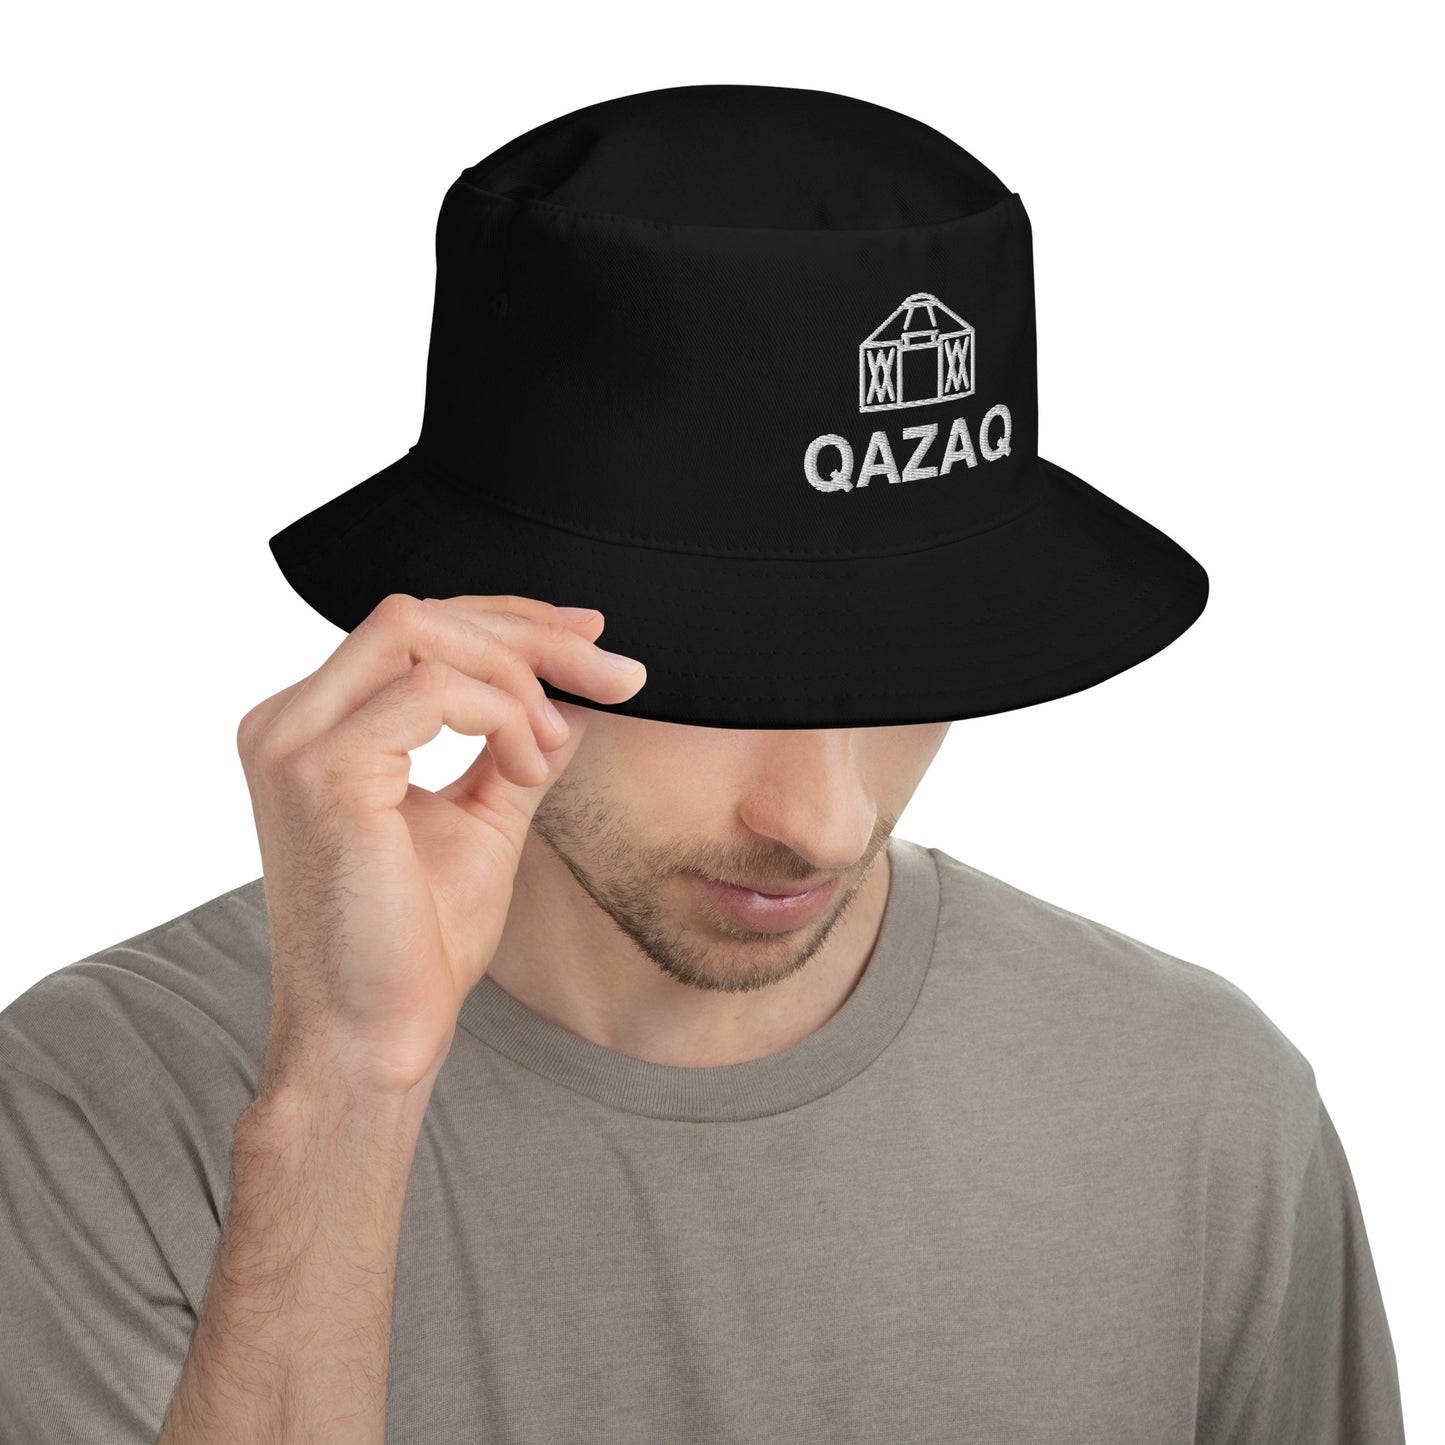 Qazaq Yurt Embroidery Bucket Hat